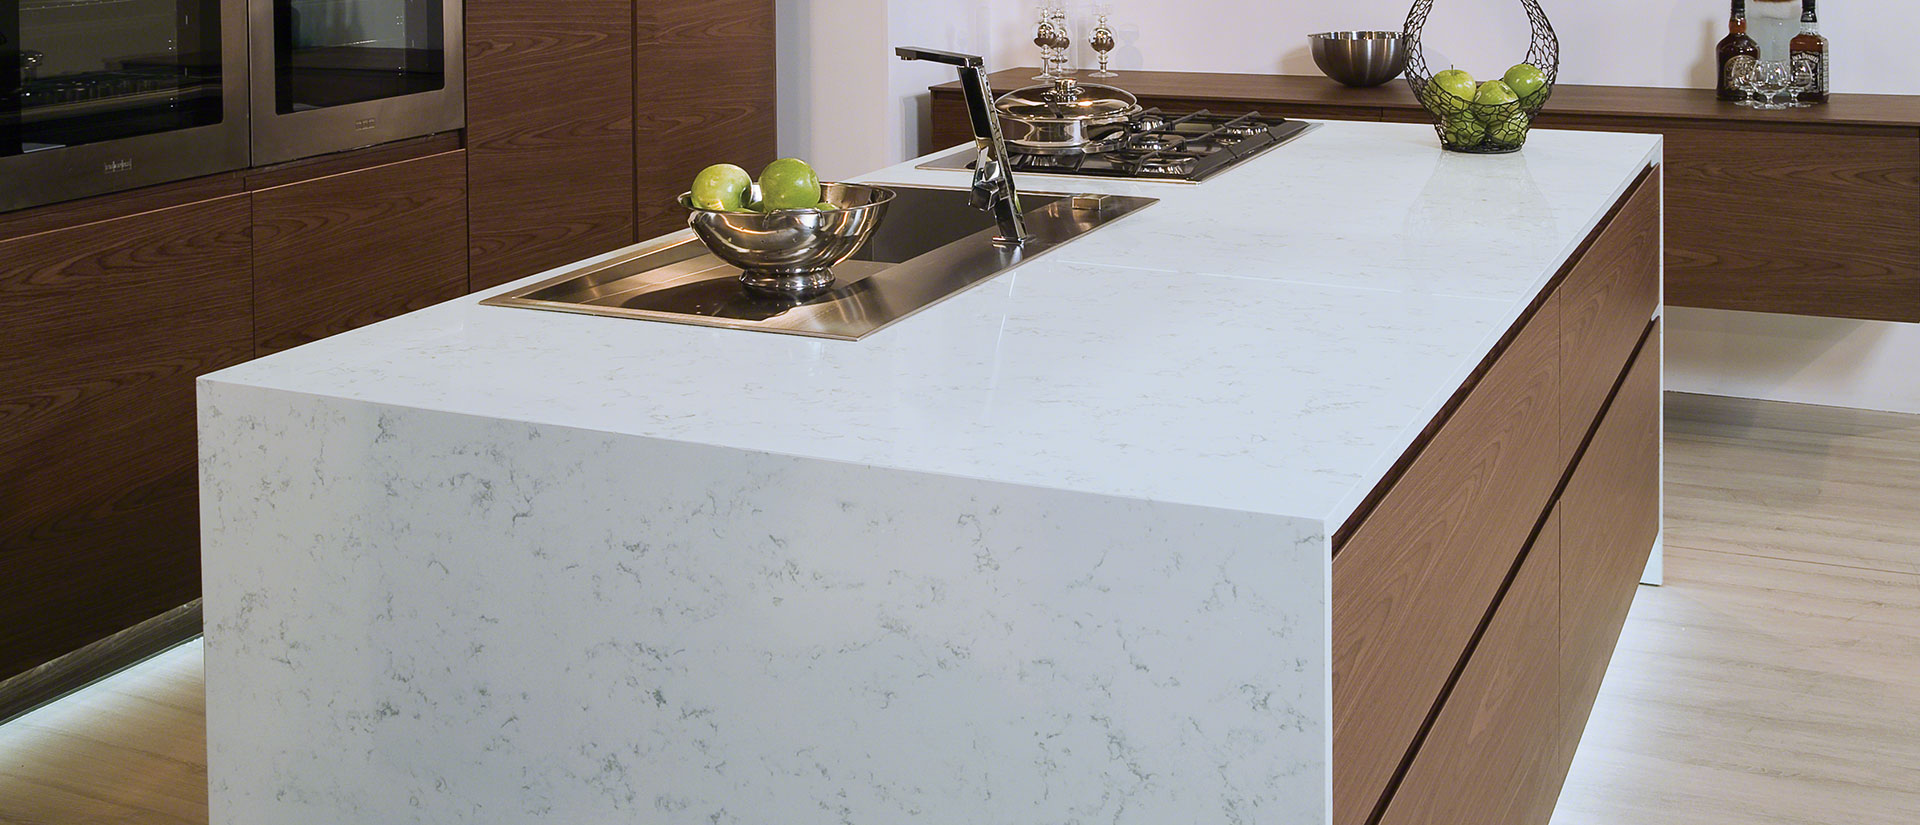 Fairy White Quartz countertop in a modern and sleek kitchen